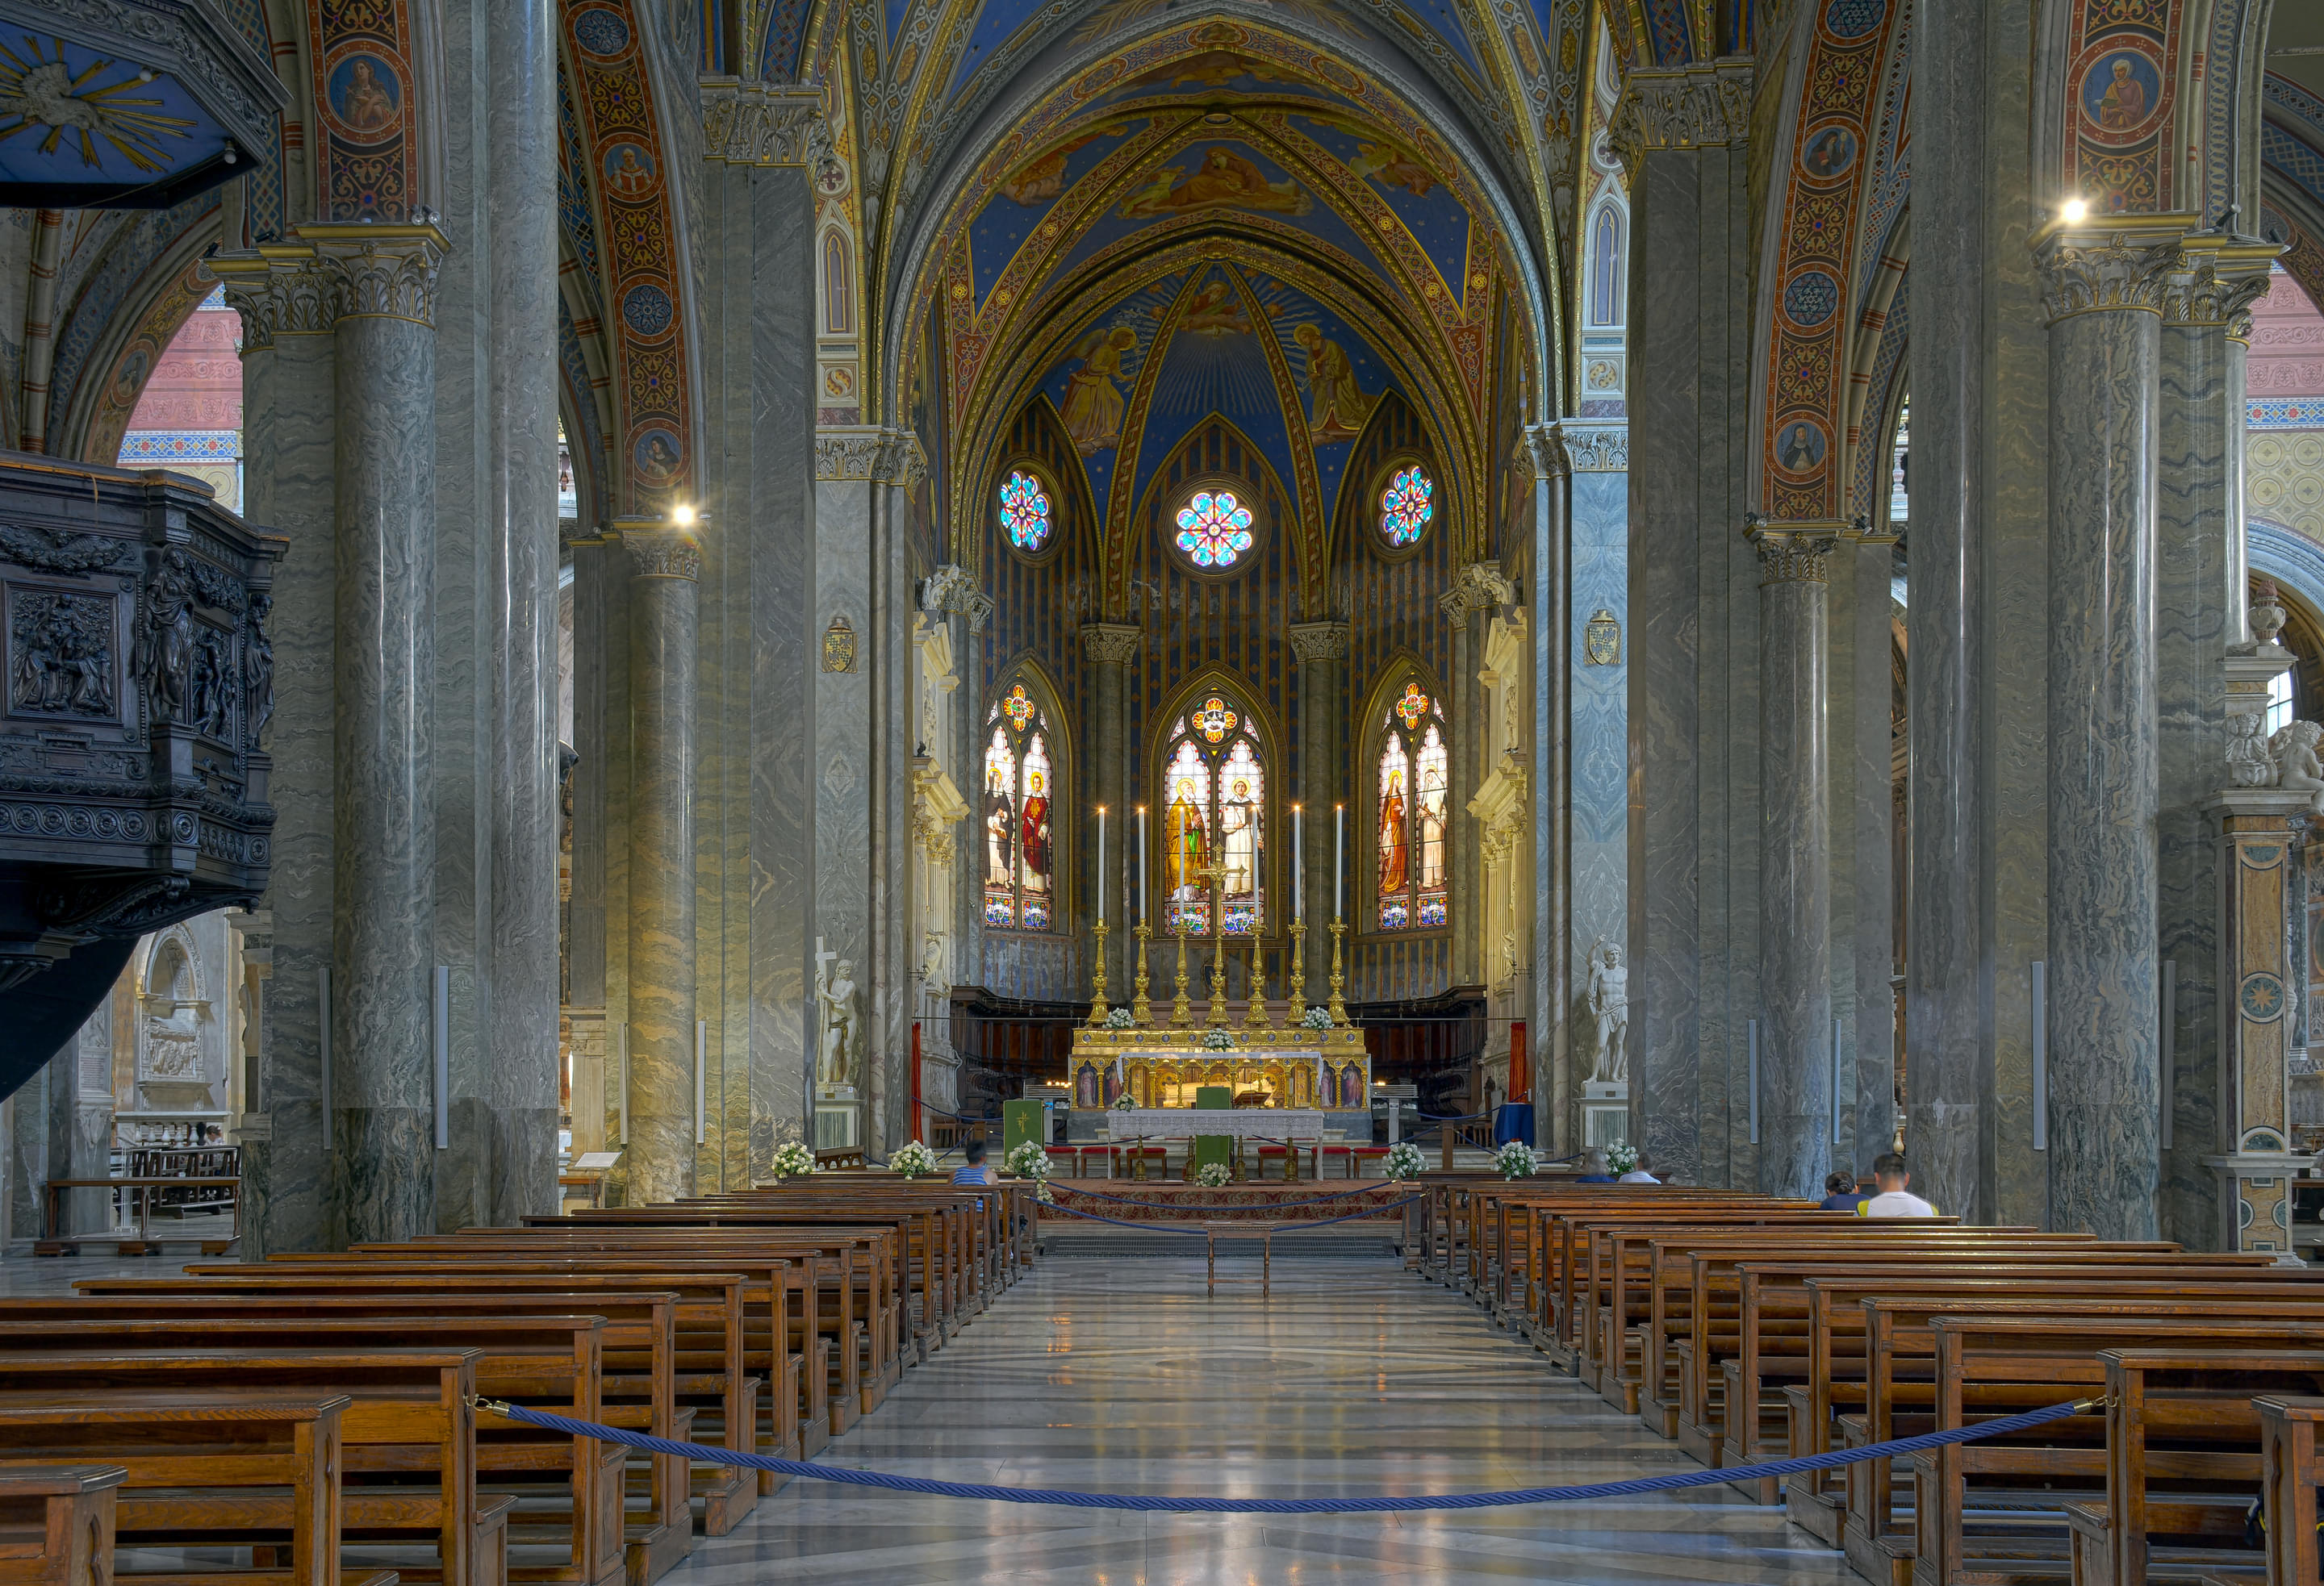 Church of Santa Maria sopra Minerva Overview